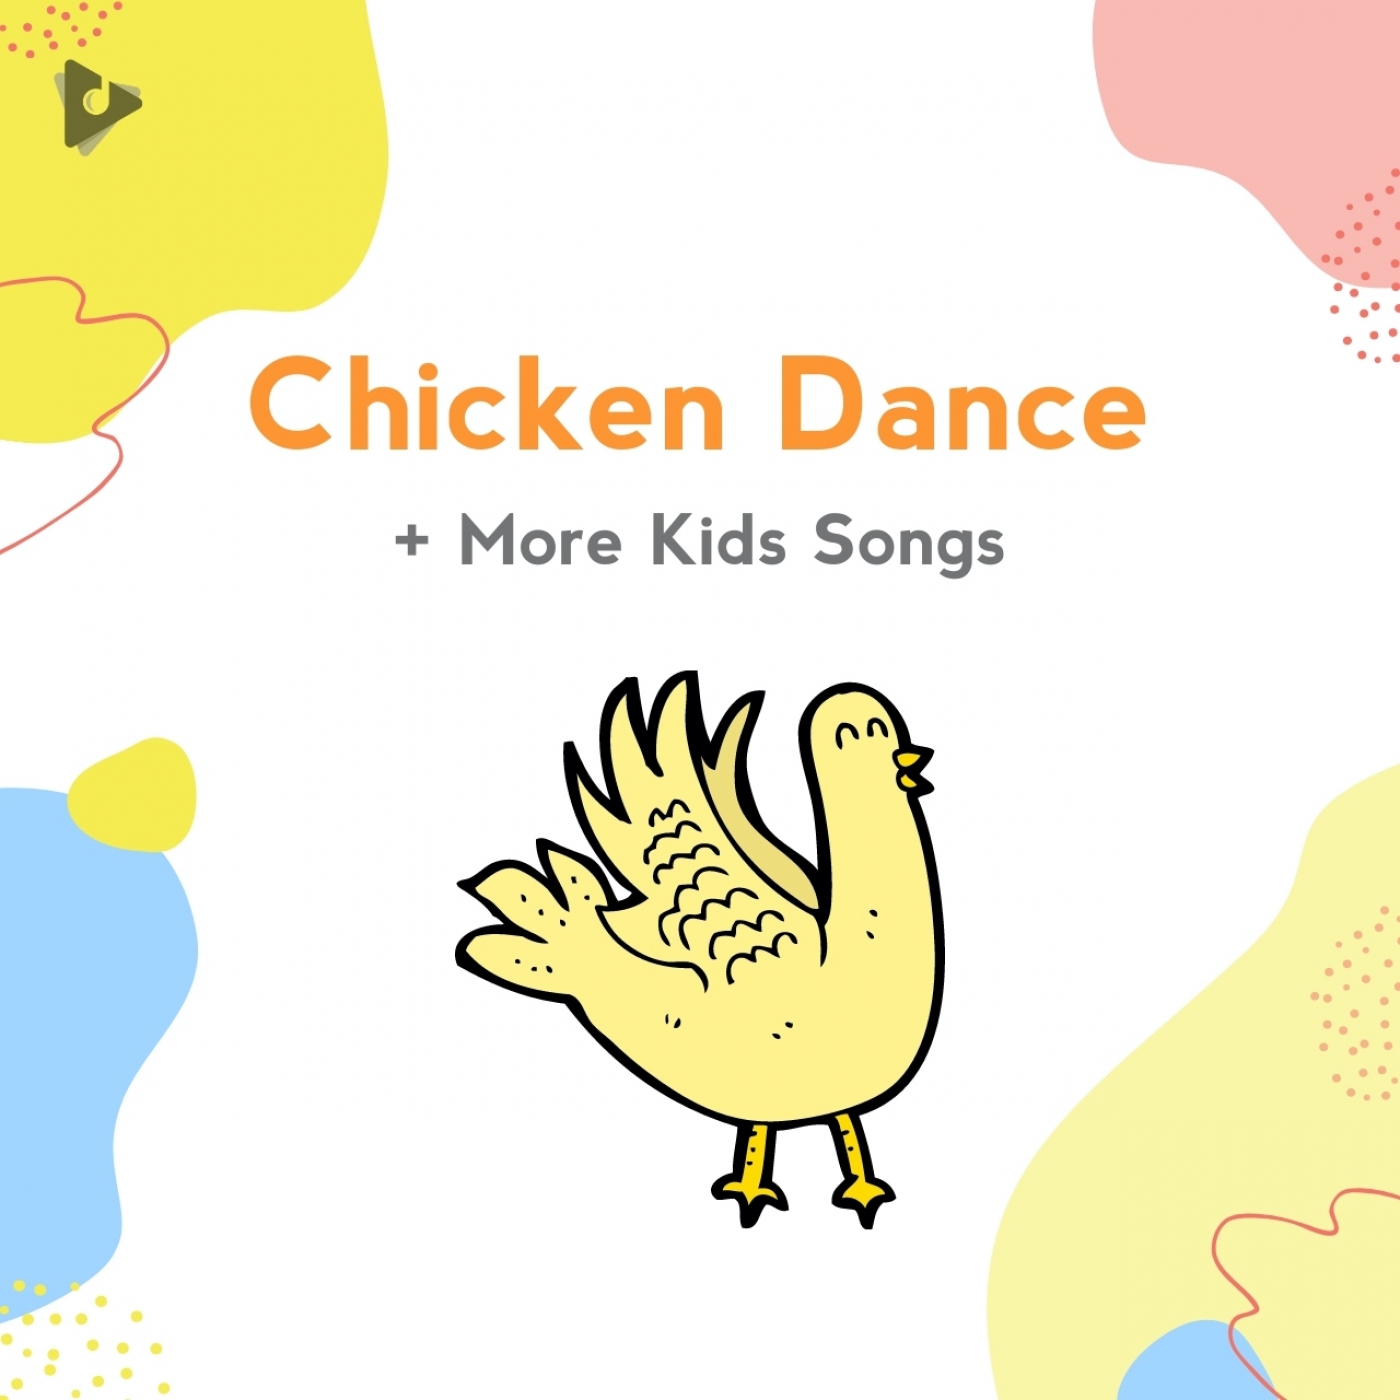 Chicken Dance + More Kids Songs